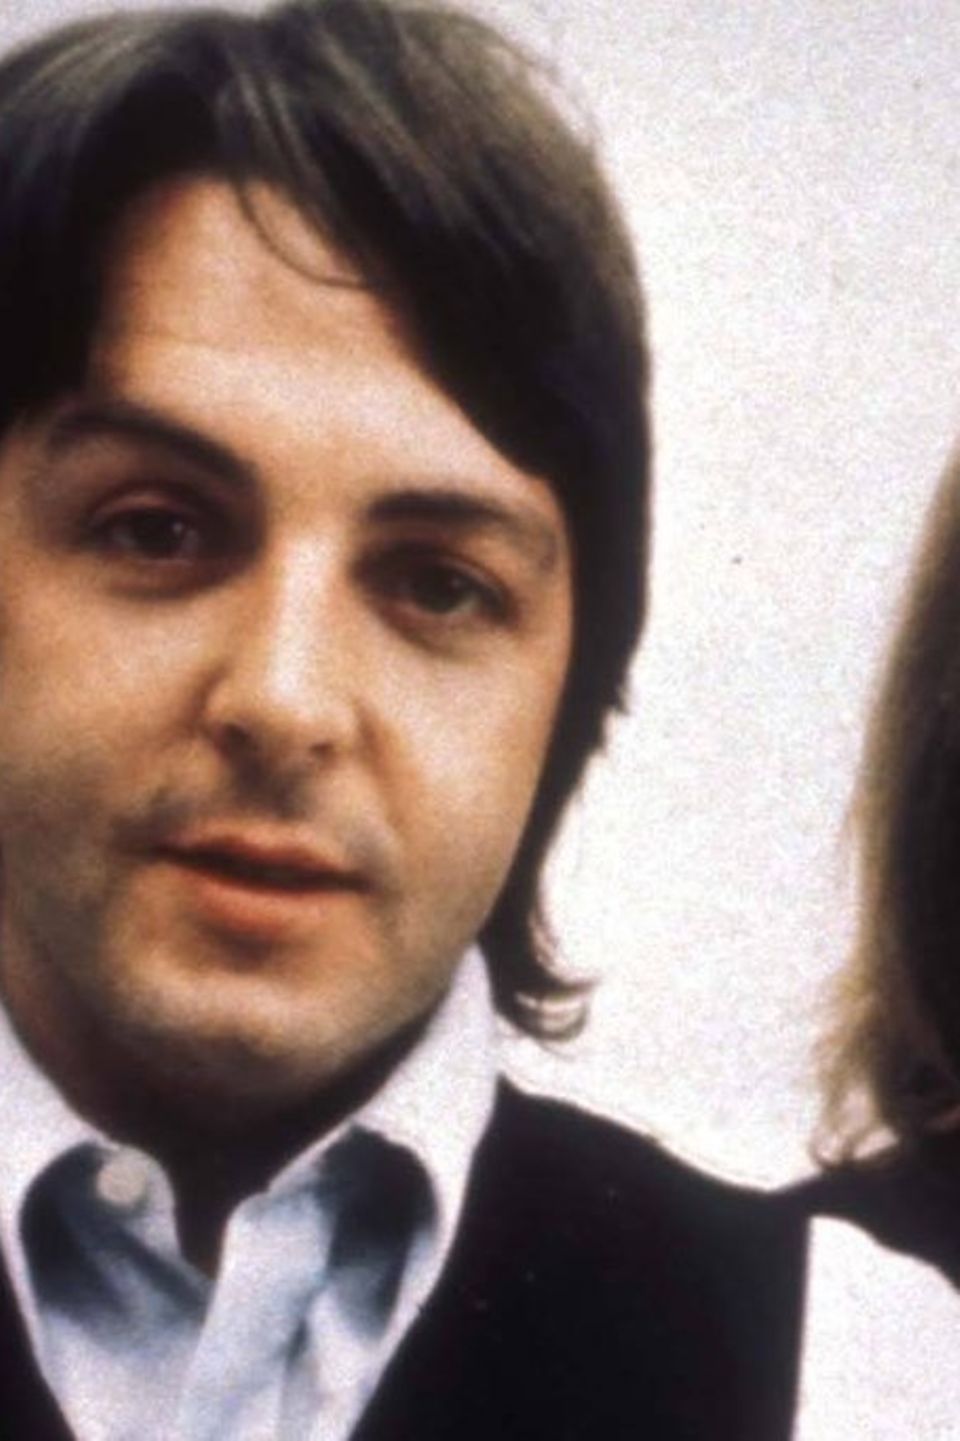 Paul McCartney (l.) erinnert sich noch gut an die Unsicherheiten seines Bandkollegen John Lennon.